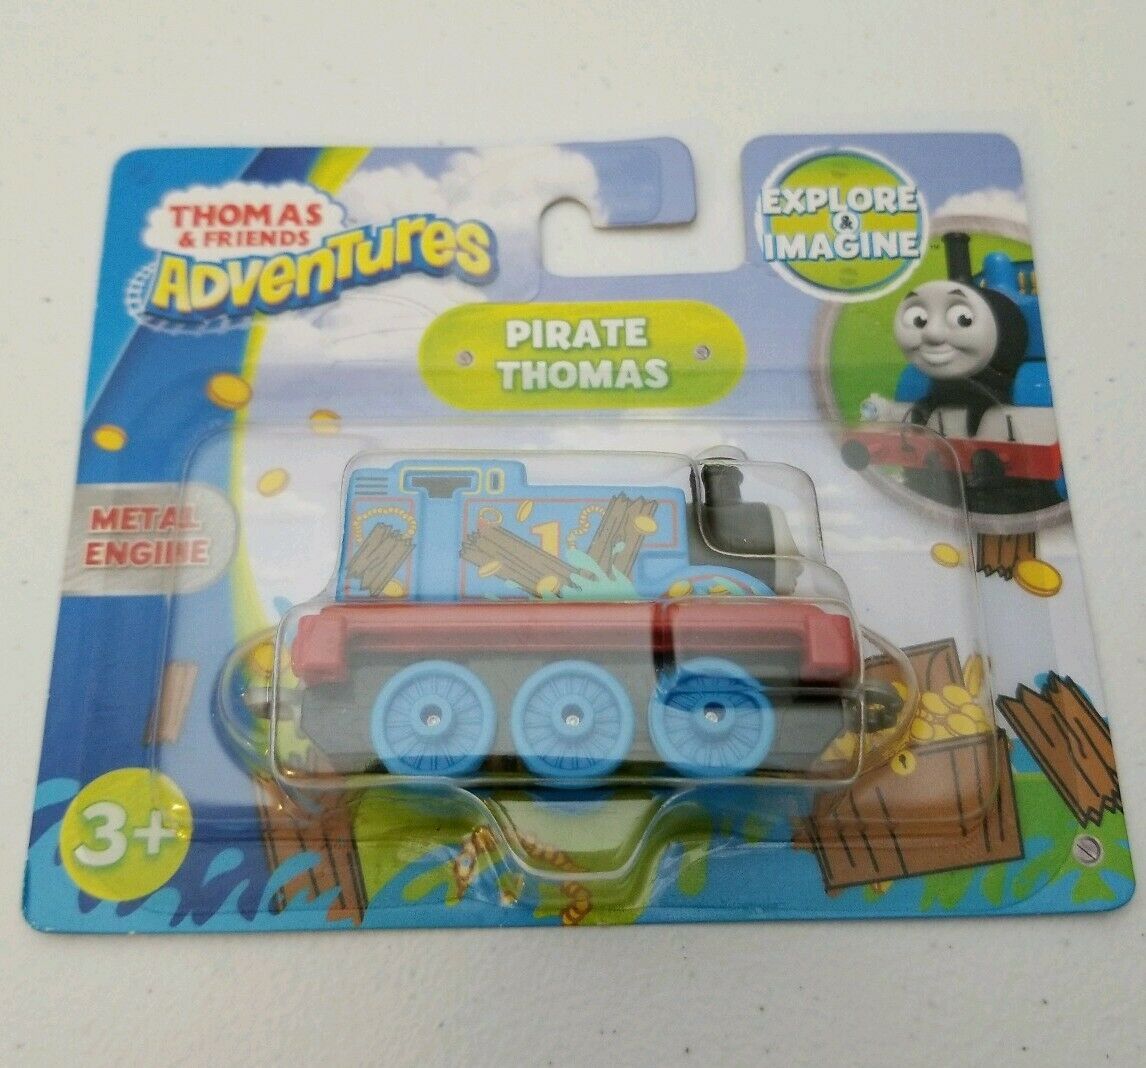 Thomas & Friends Adventures Pirate Thomas Metal Engine Series Fisher Price 2018